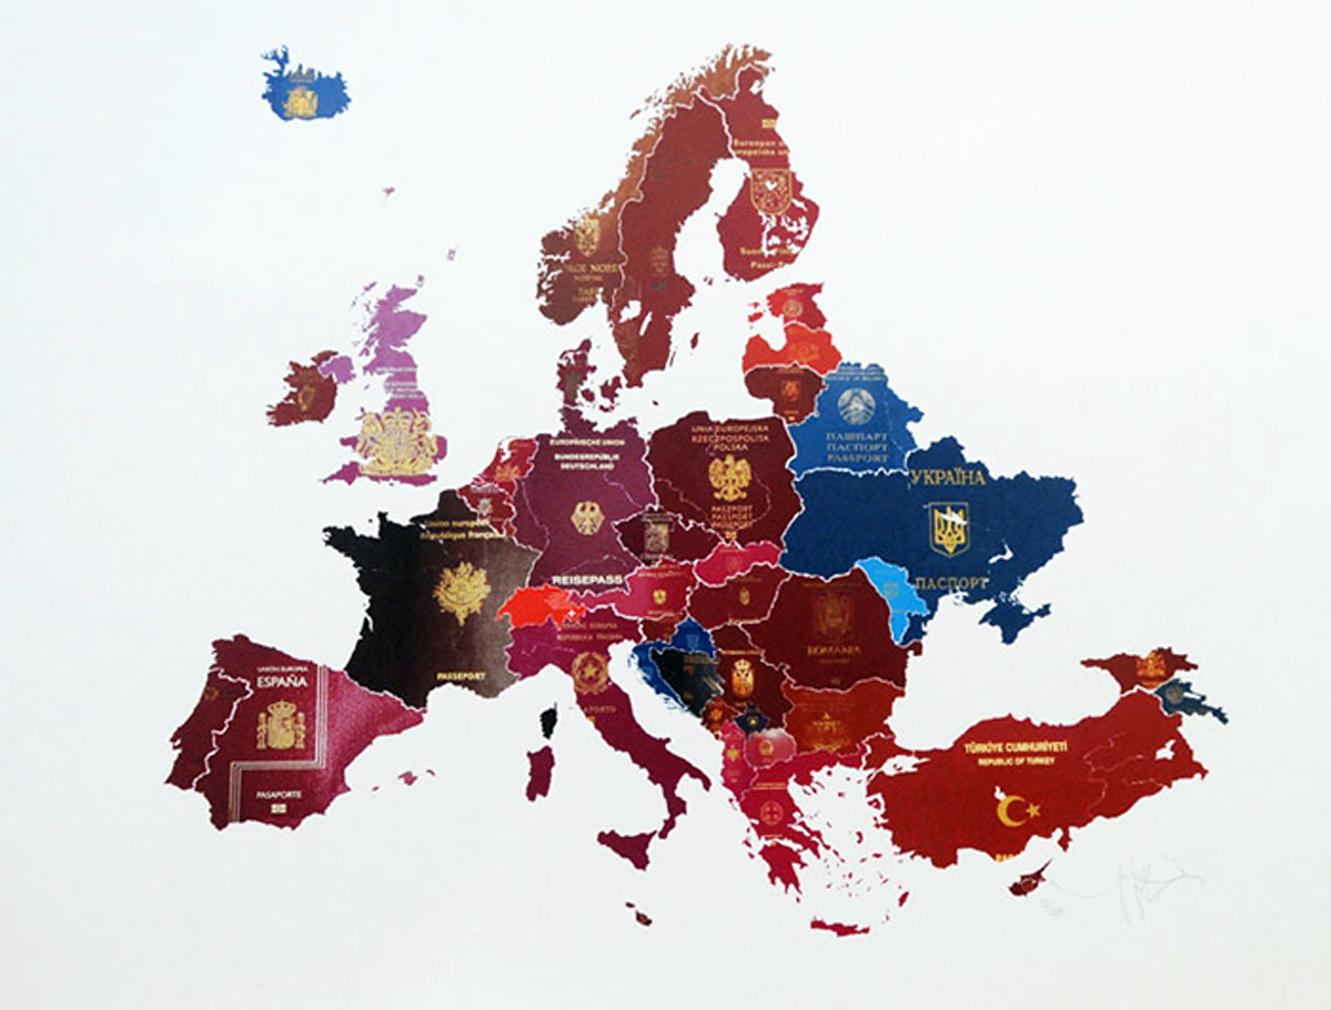 Europe - mixed media passport map print hand painted - Print by Yanko Tihov